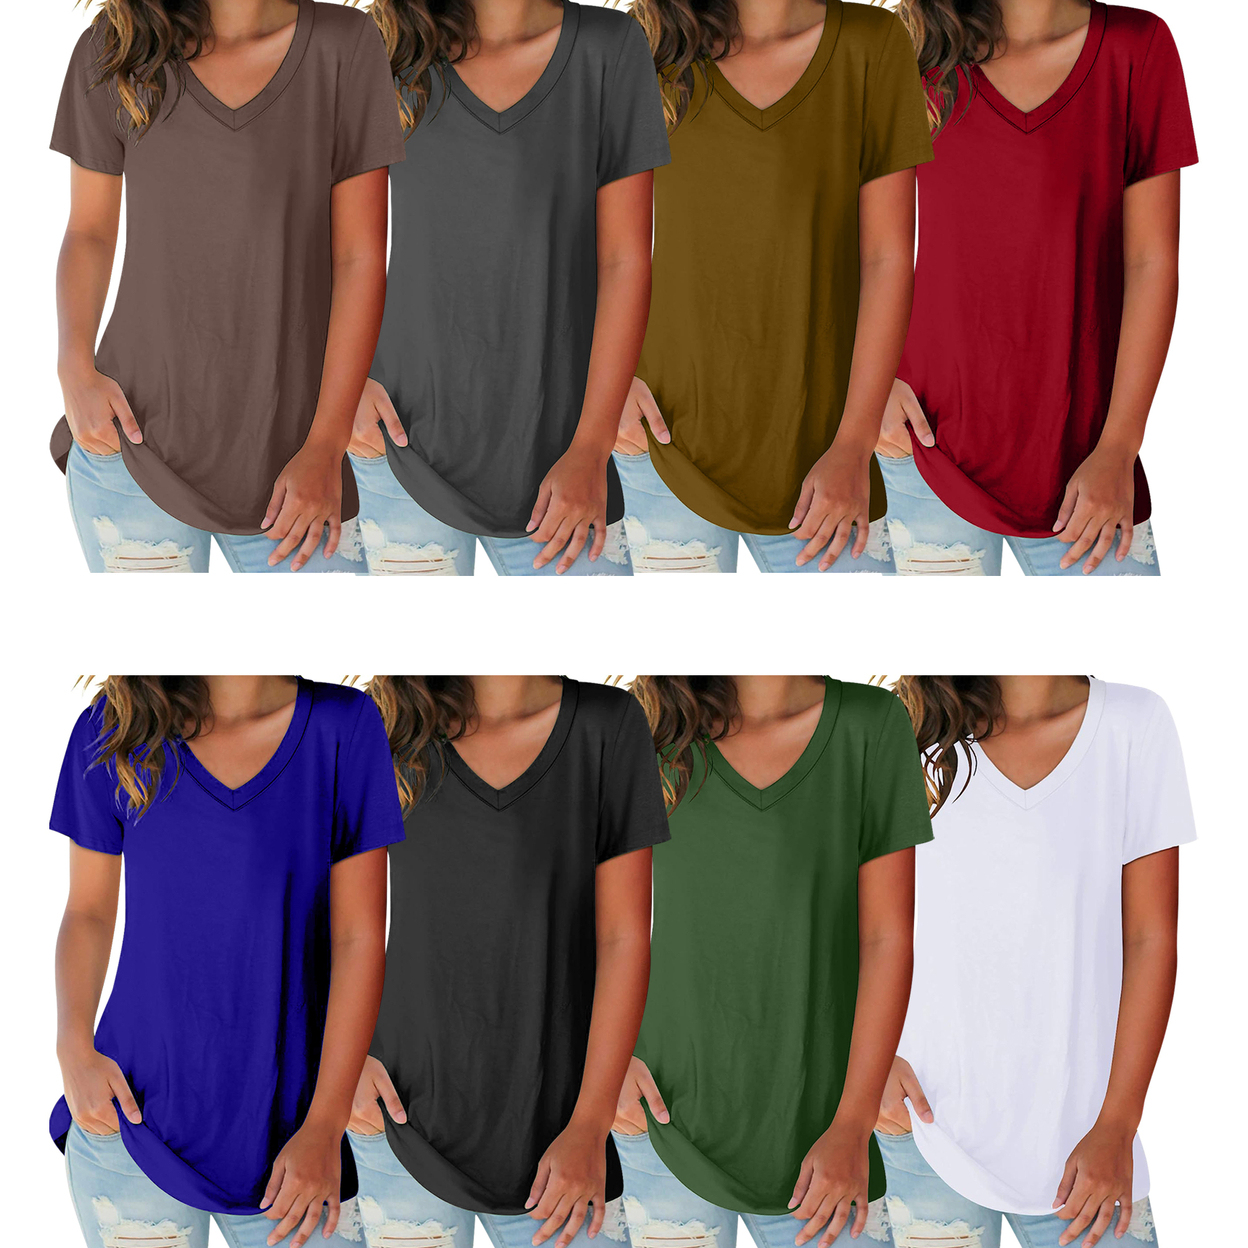 2-Pack: Women's Ultra Soft Smooth Cotton Blend Basic V-Neck Short Sleeve Shirts - Black & Navy, Large